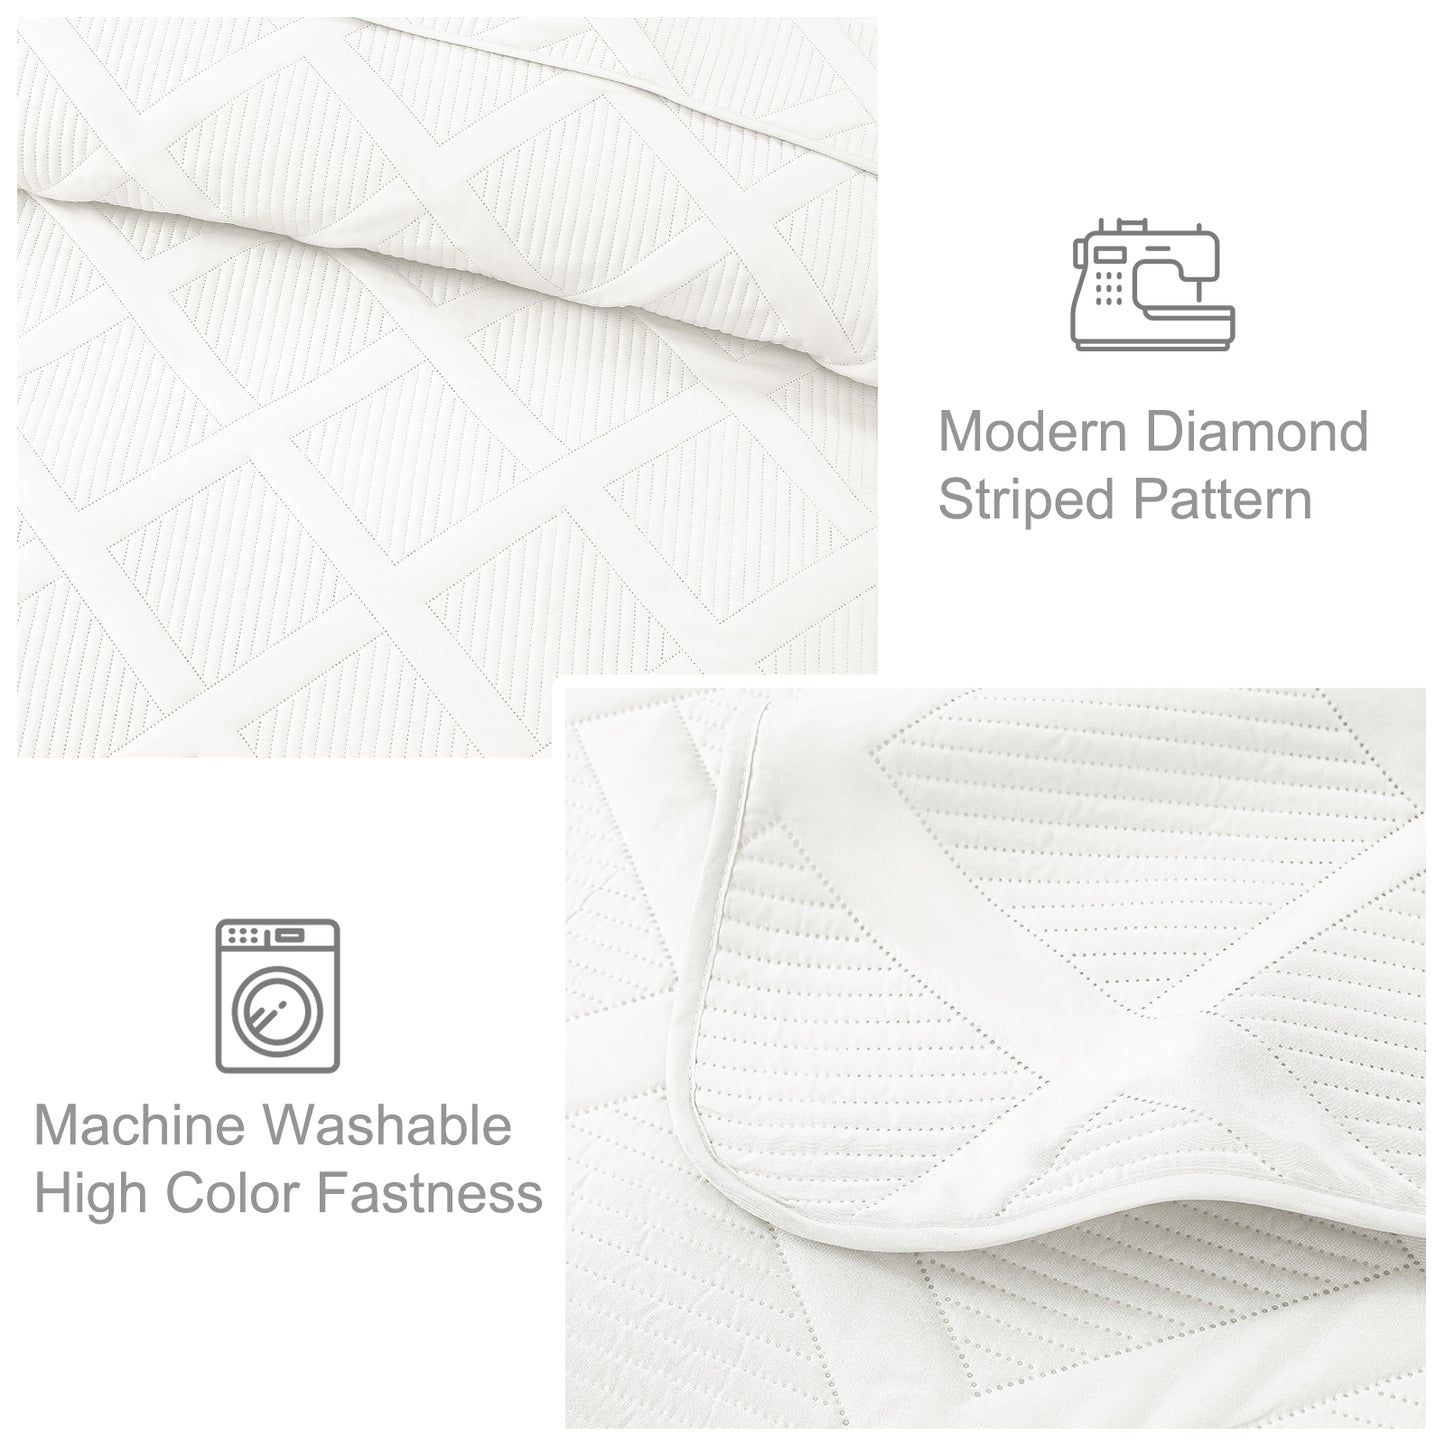 Exclusivo Mezcla Ultrasonic Twin/ Twin XL Quilt Set, Lightweight Bedspreads Modern Striped Coverlet with 1 Pillow Sham, White